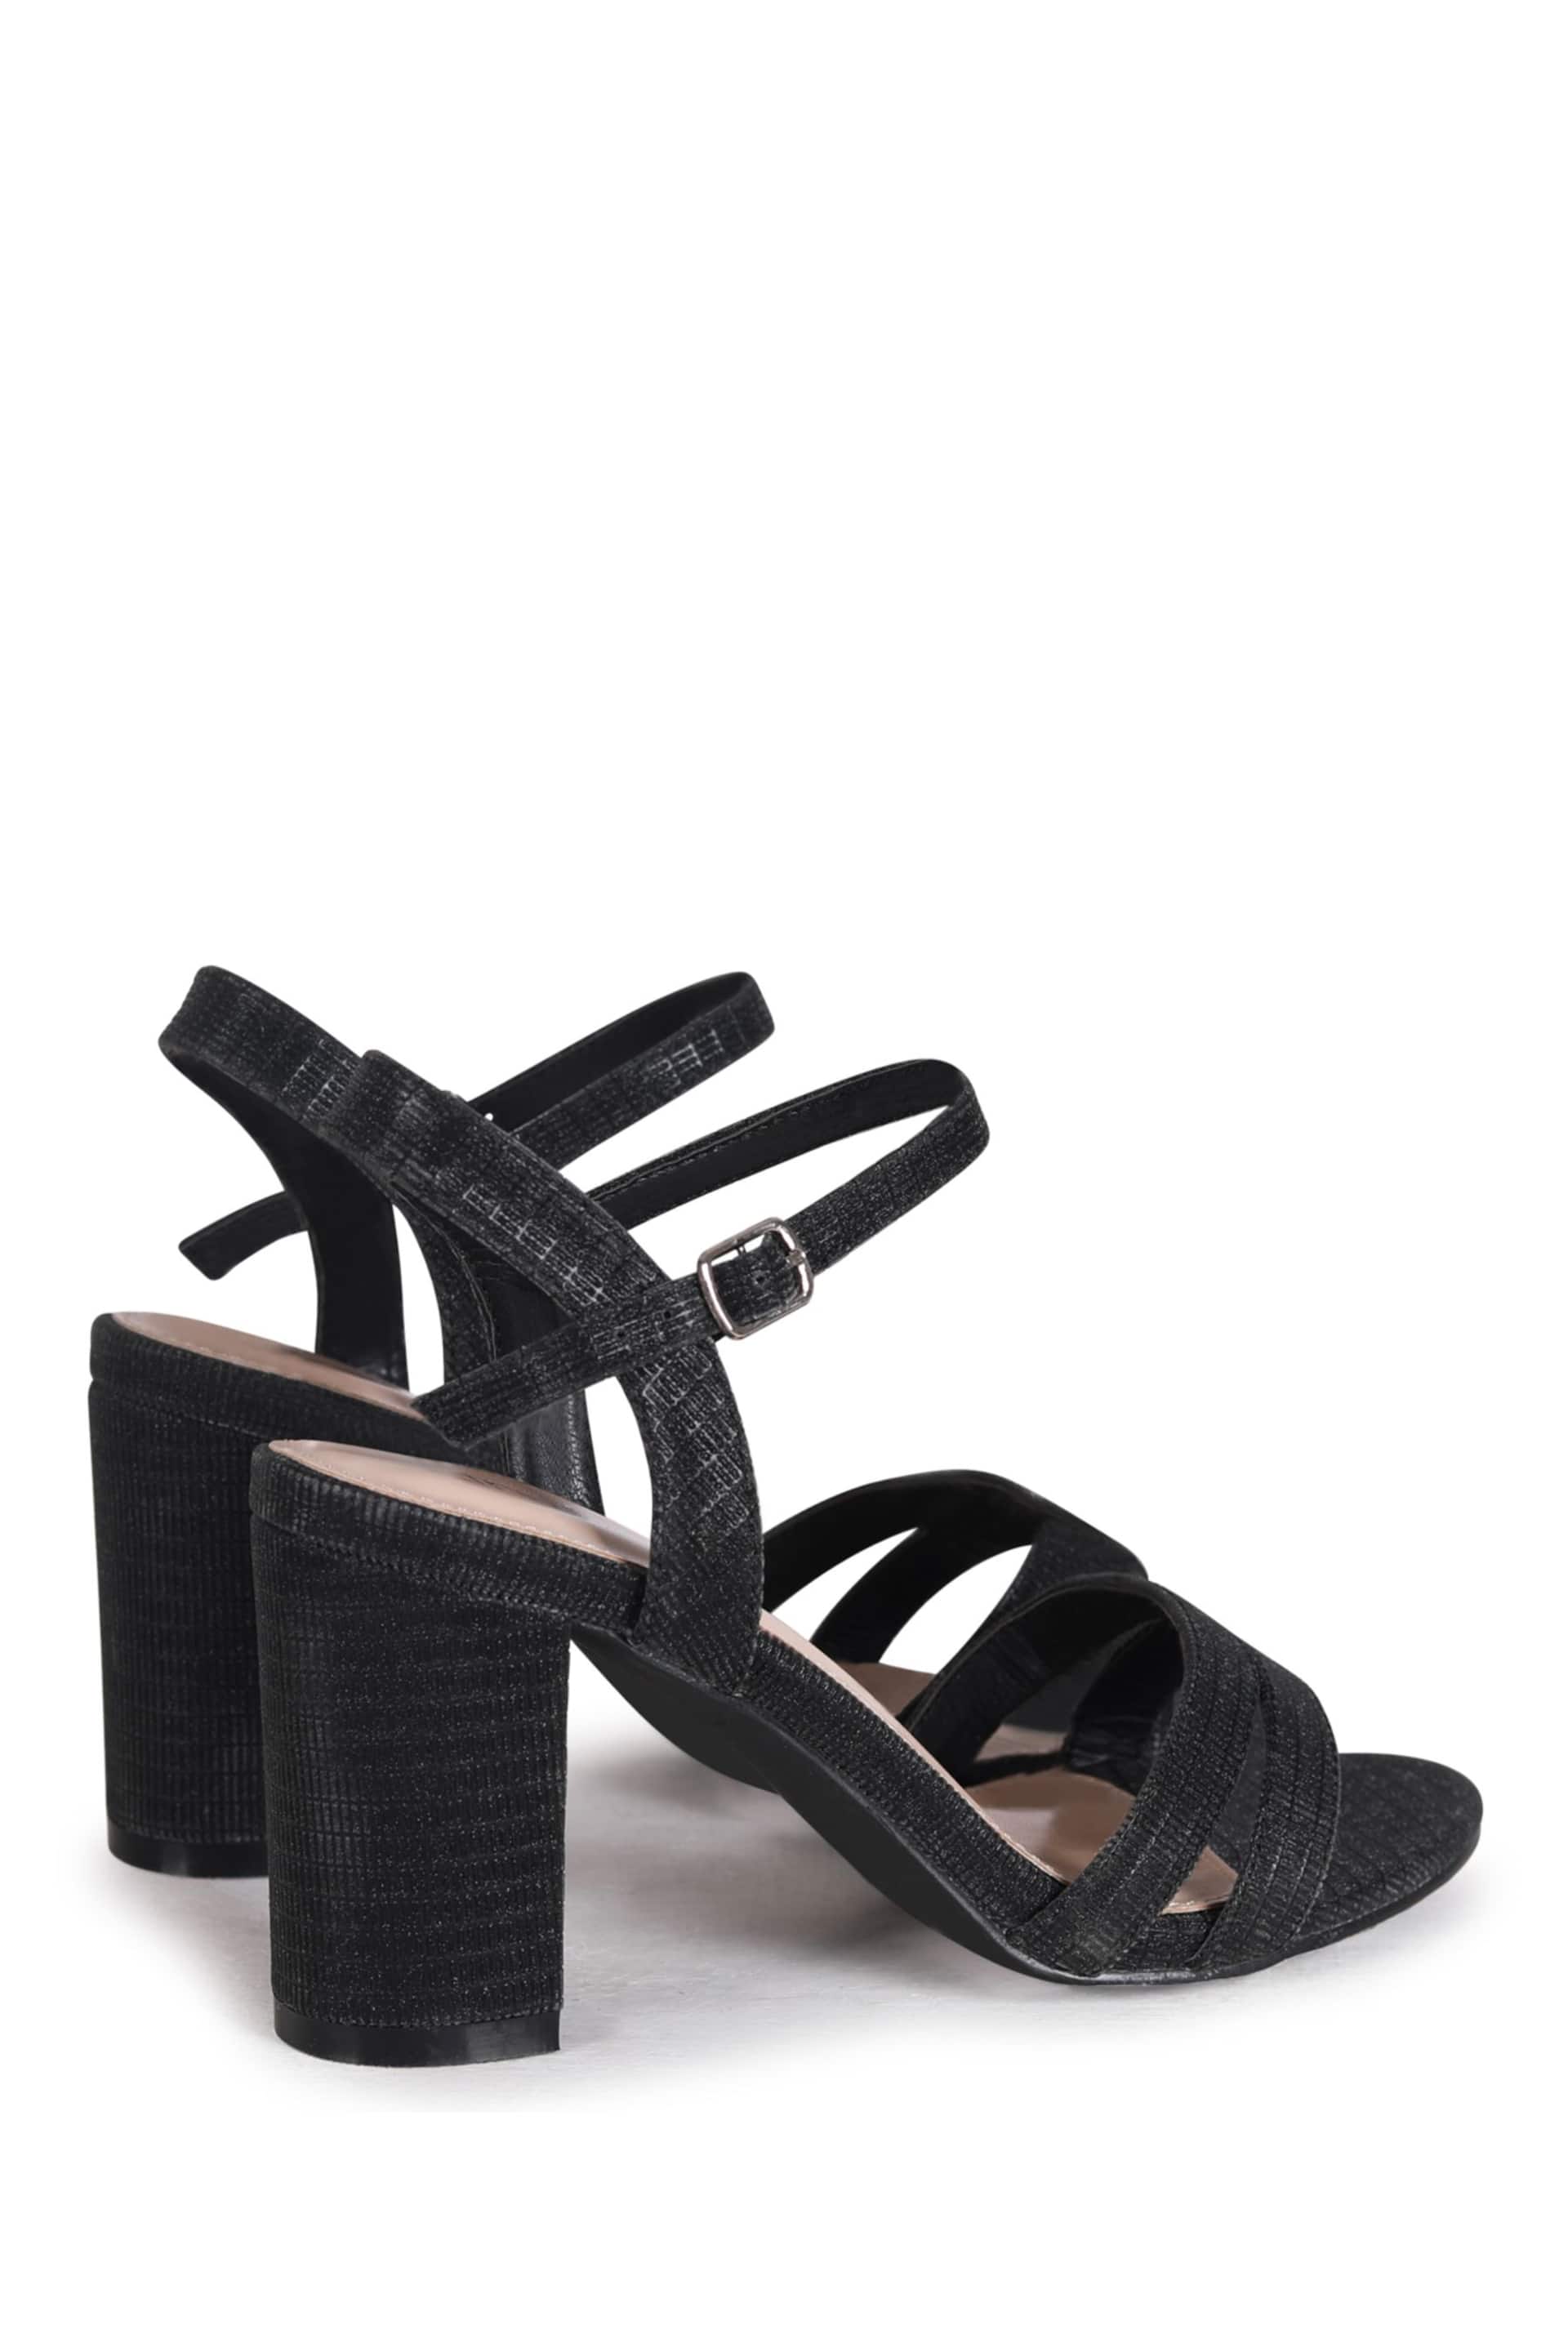 Linzi Black Horizon Barely There Glitter Block Heeled Sandals - Image 5 of 5